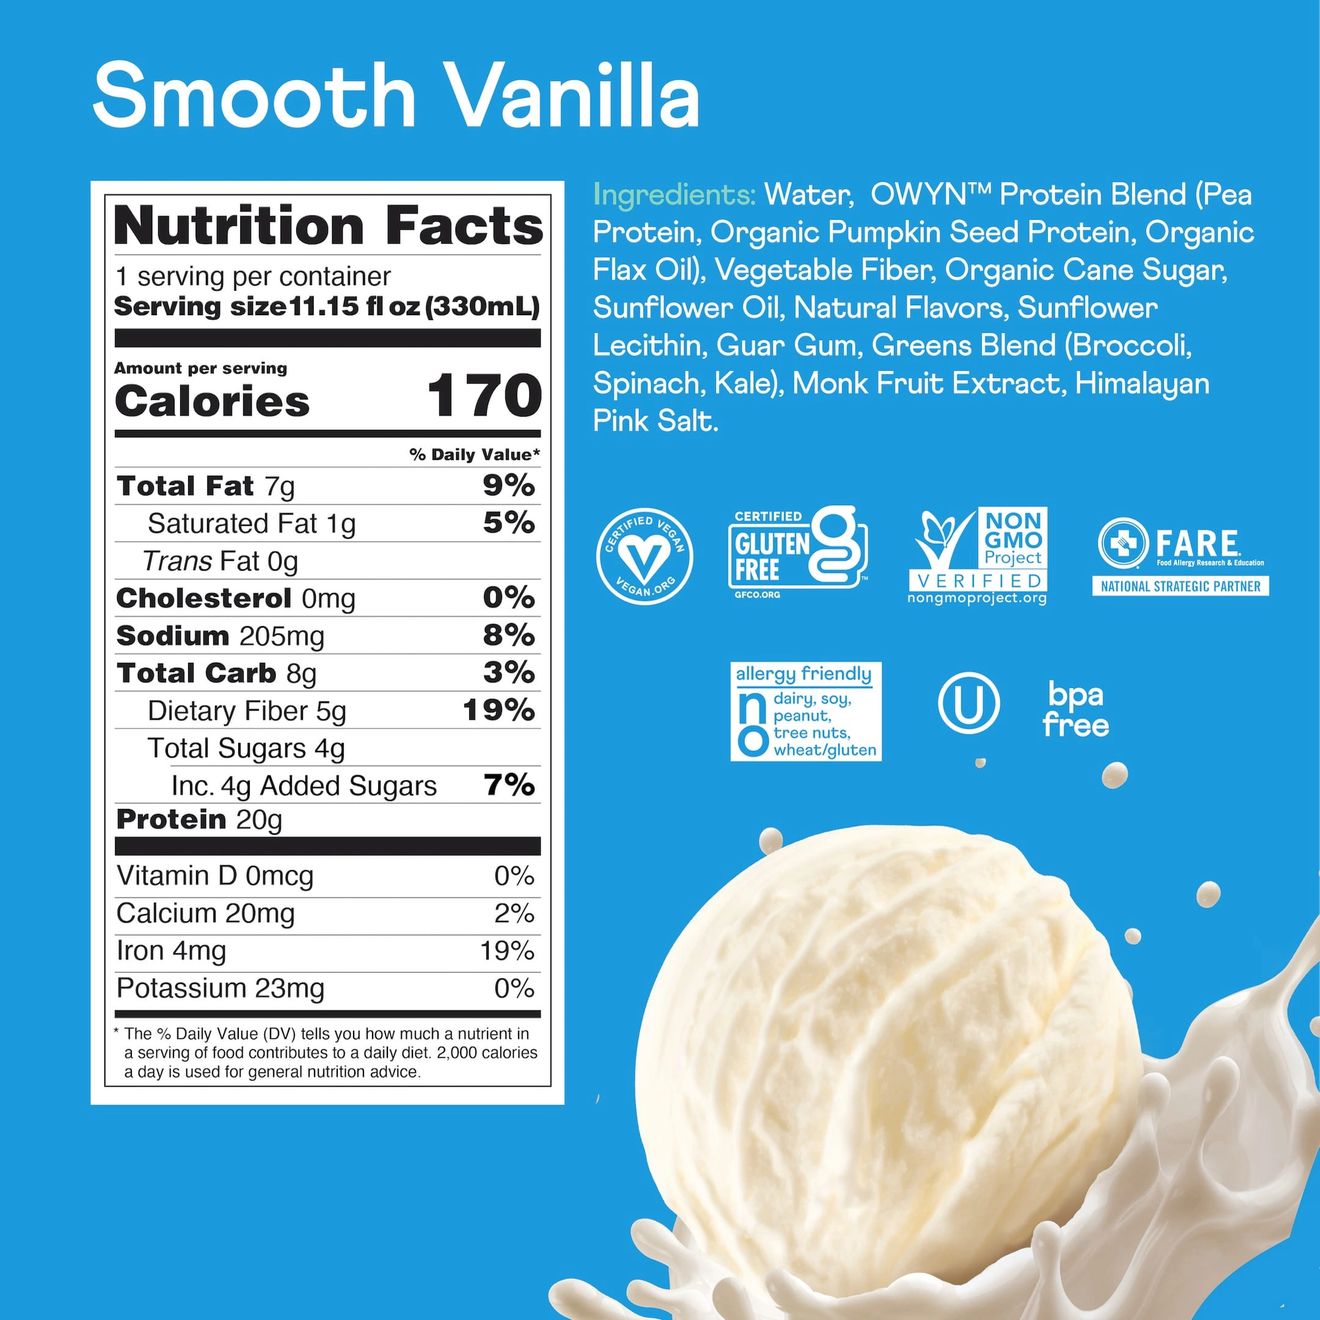 OWYN Protein Nutrition Shake, Smooth Vanilla, 4 Ct